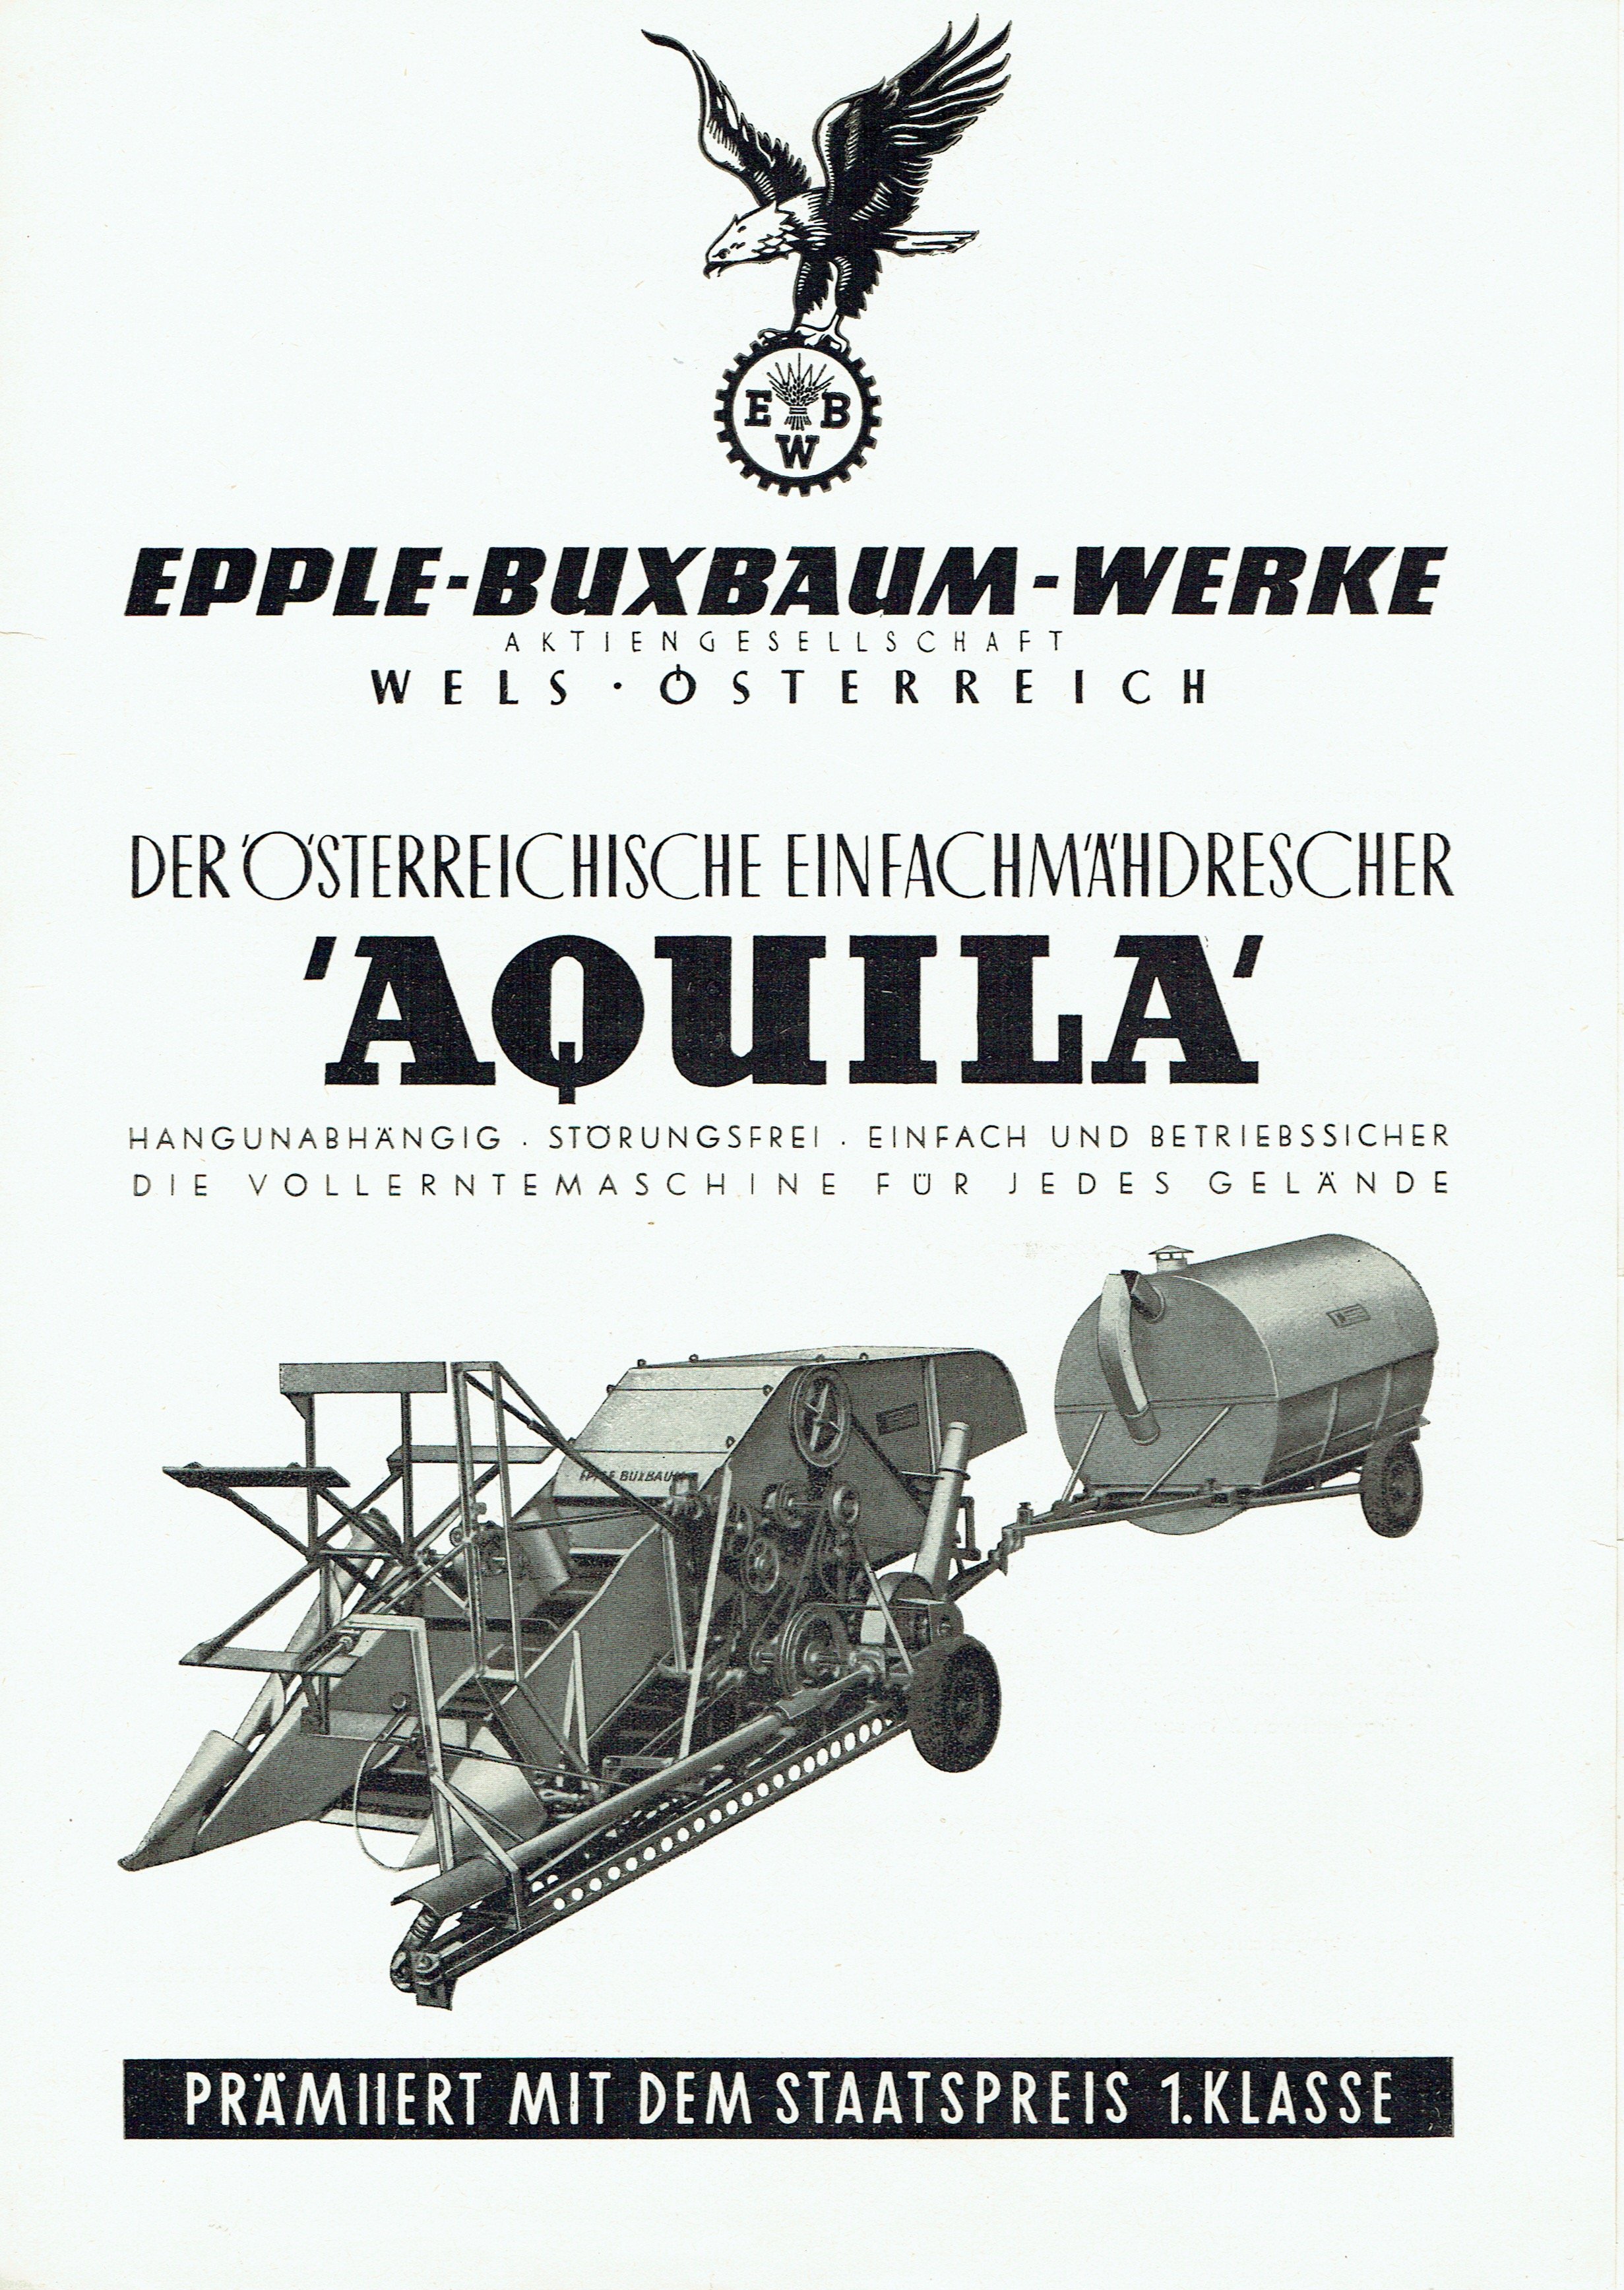 Epple-Buxbaum-Werke Aquila1250E / Aquila1600E (Mähdrescherarchiv Kühnstetter CC BY-NC-SA)